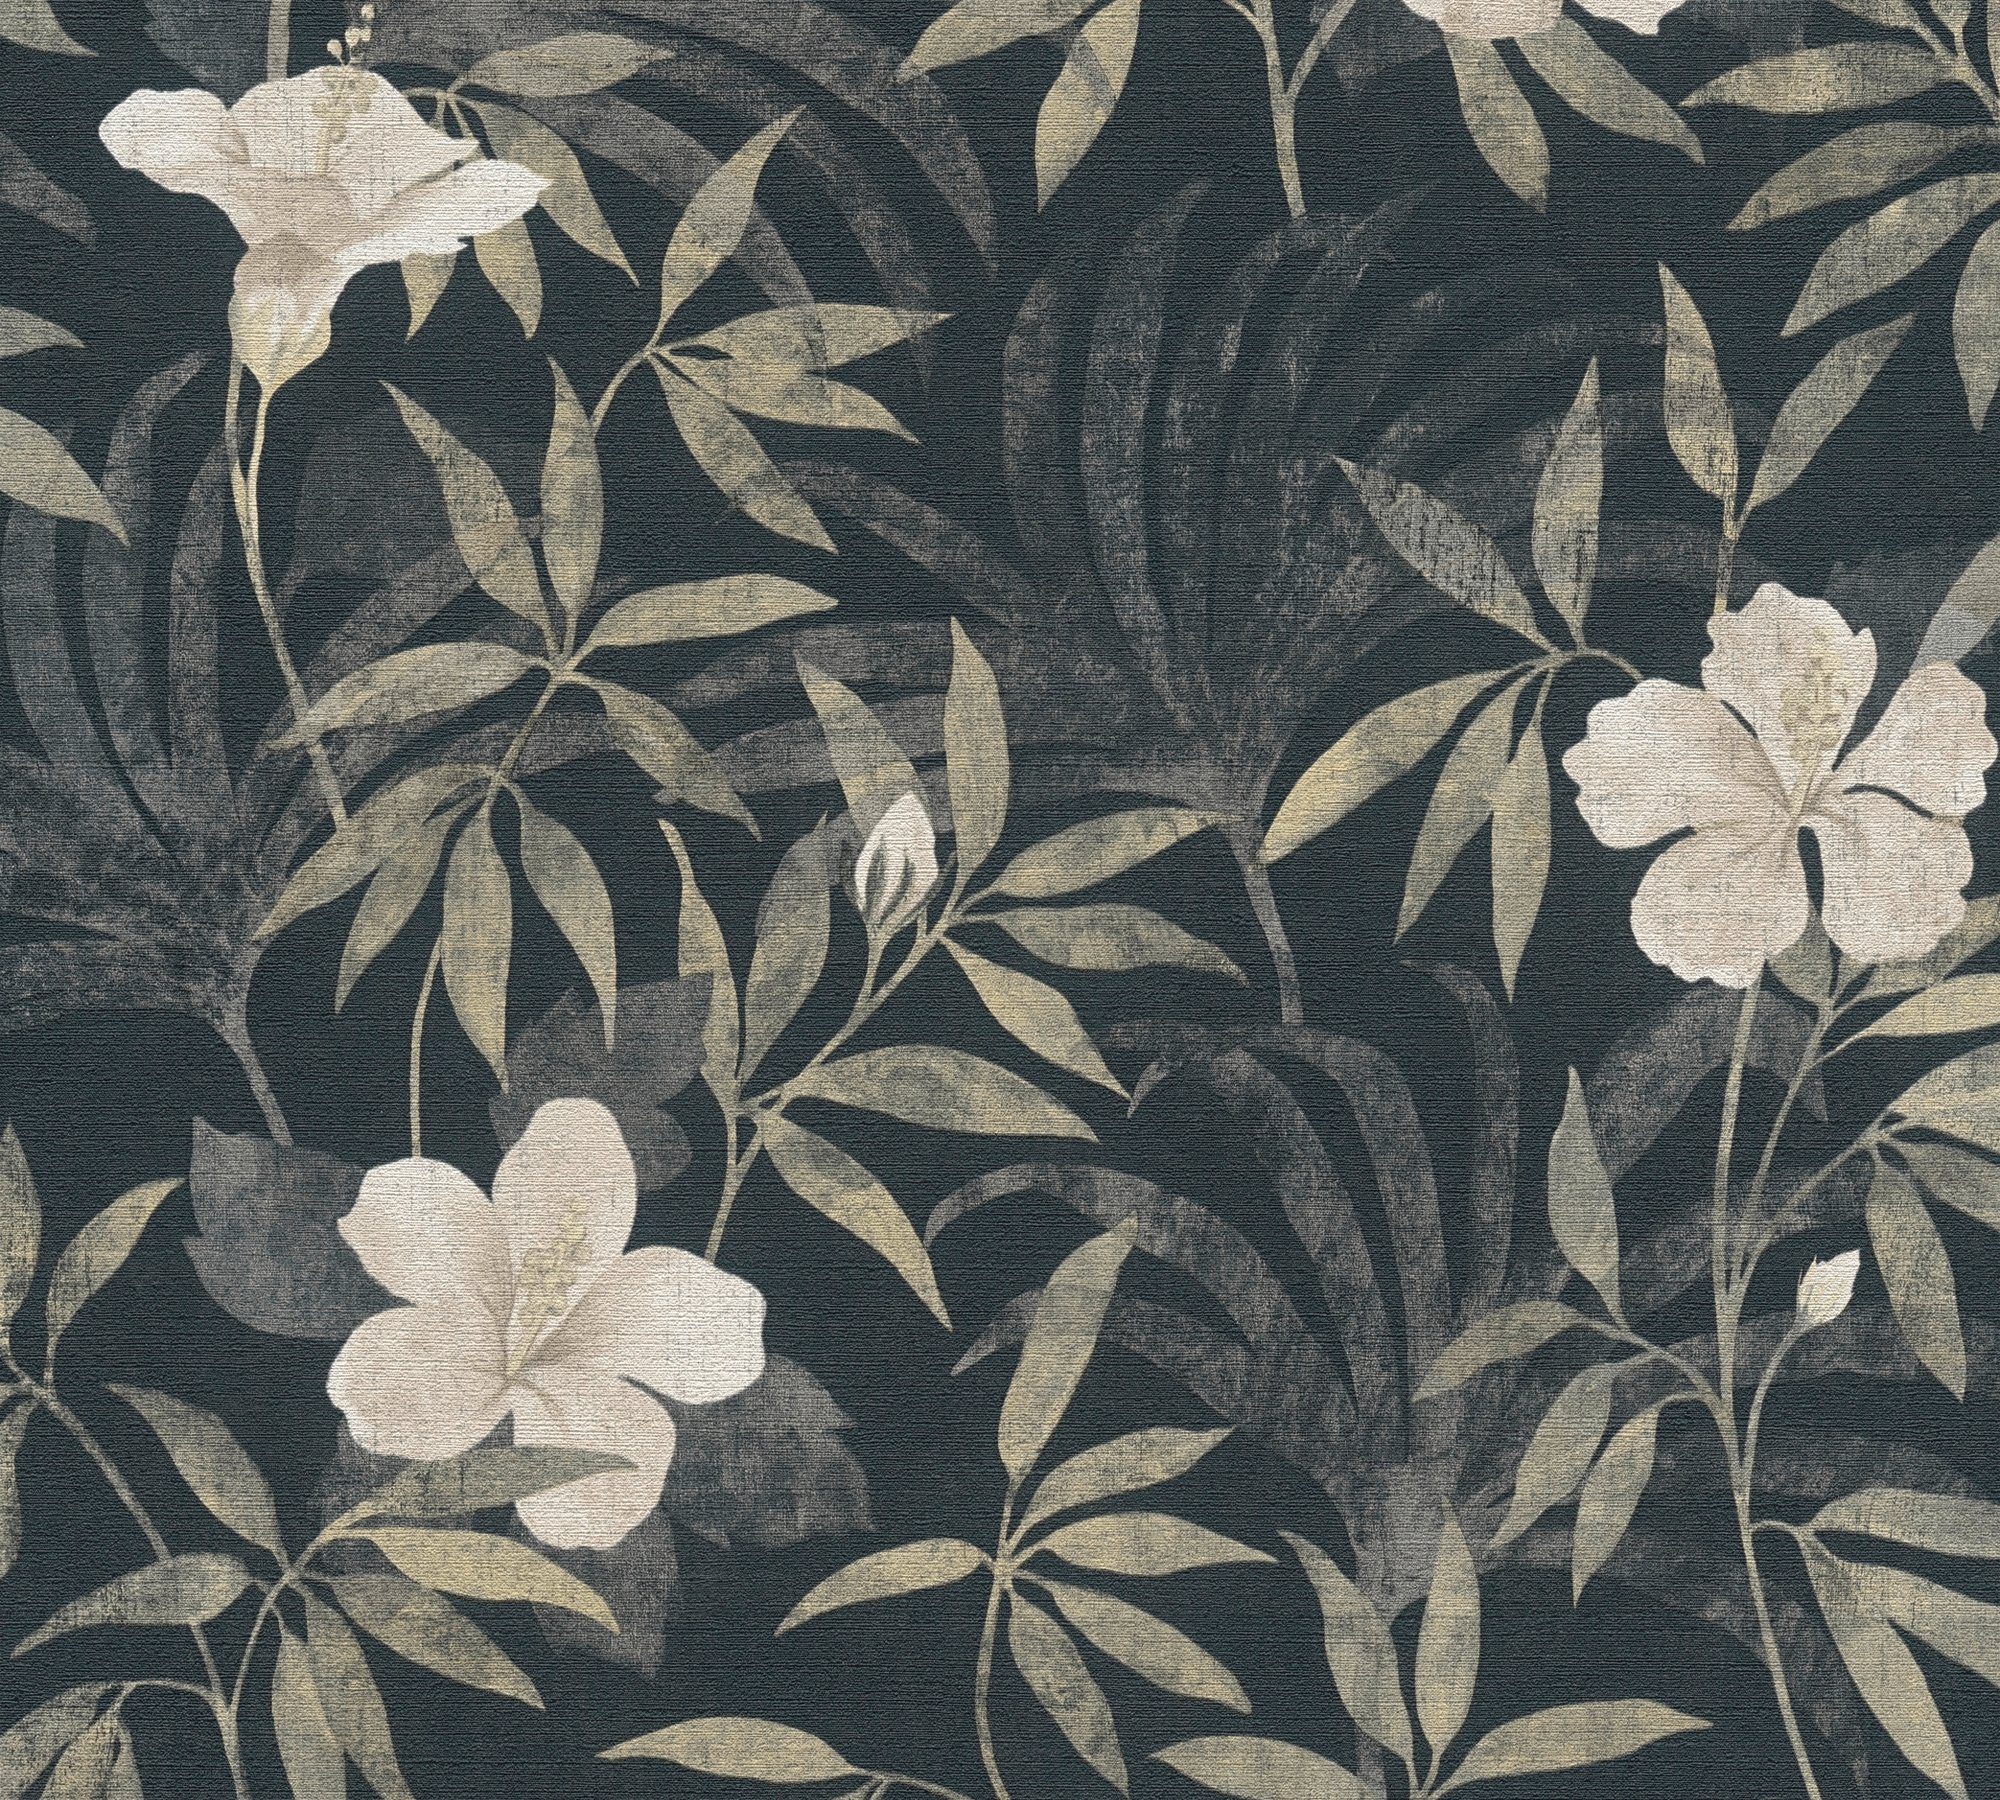 botanisch, Tapete Dschungeltapete floral, A.S. Vliestapete Blumen tropisch, Cuba, Création braun/grau/schwarz